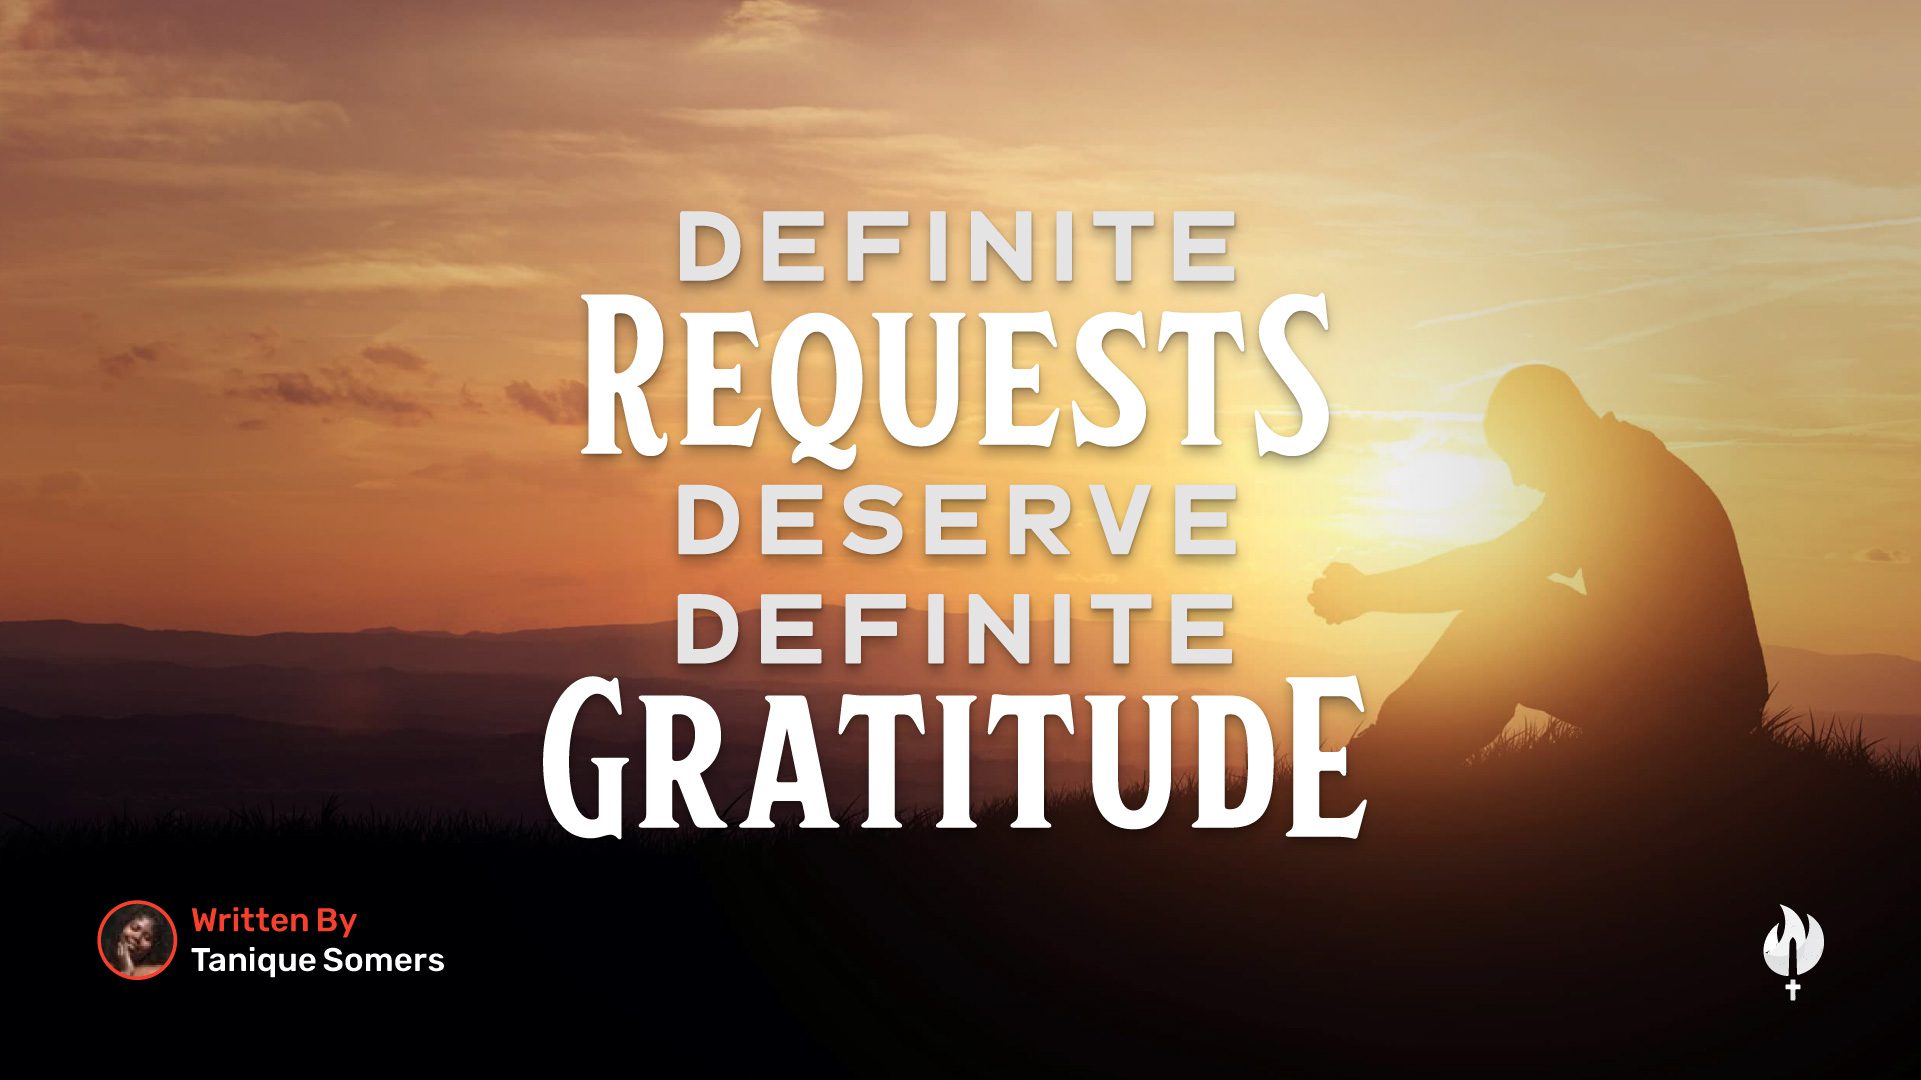 Featured Image for “Definite Requests Deserve Definite Gratitude”